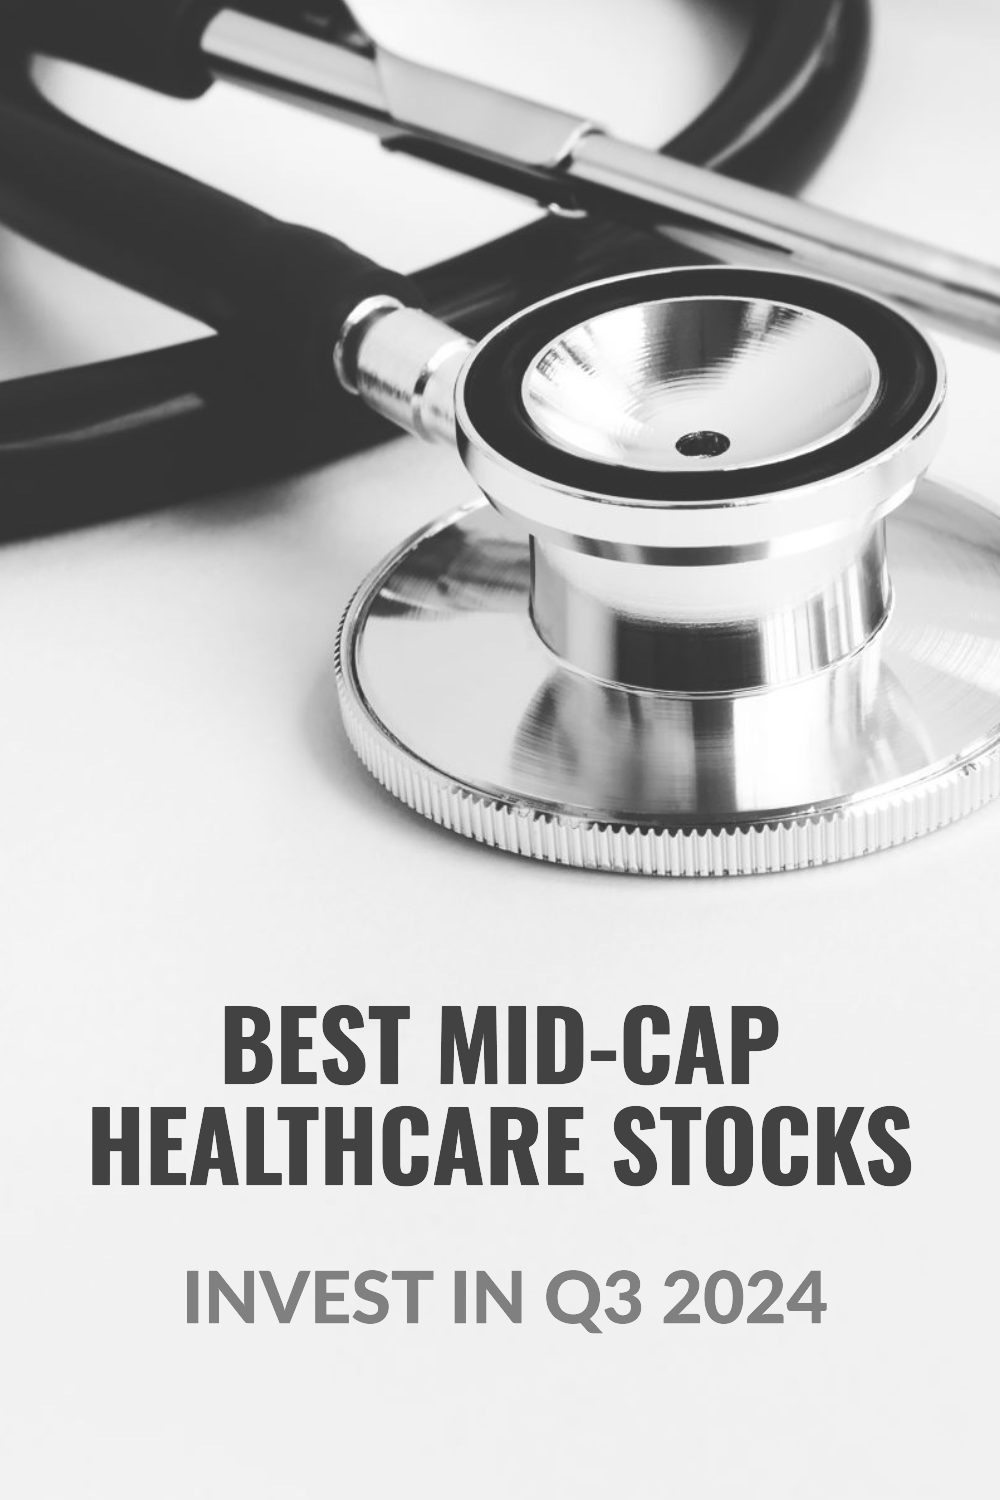 Best mid-cap healthcare stocks to invest in Q3 2024